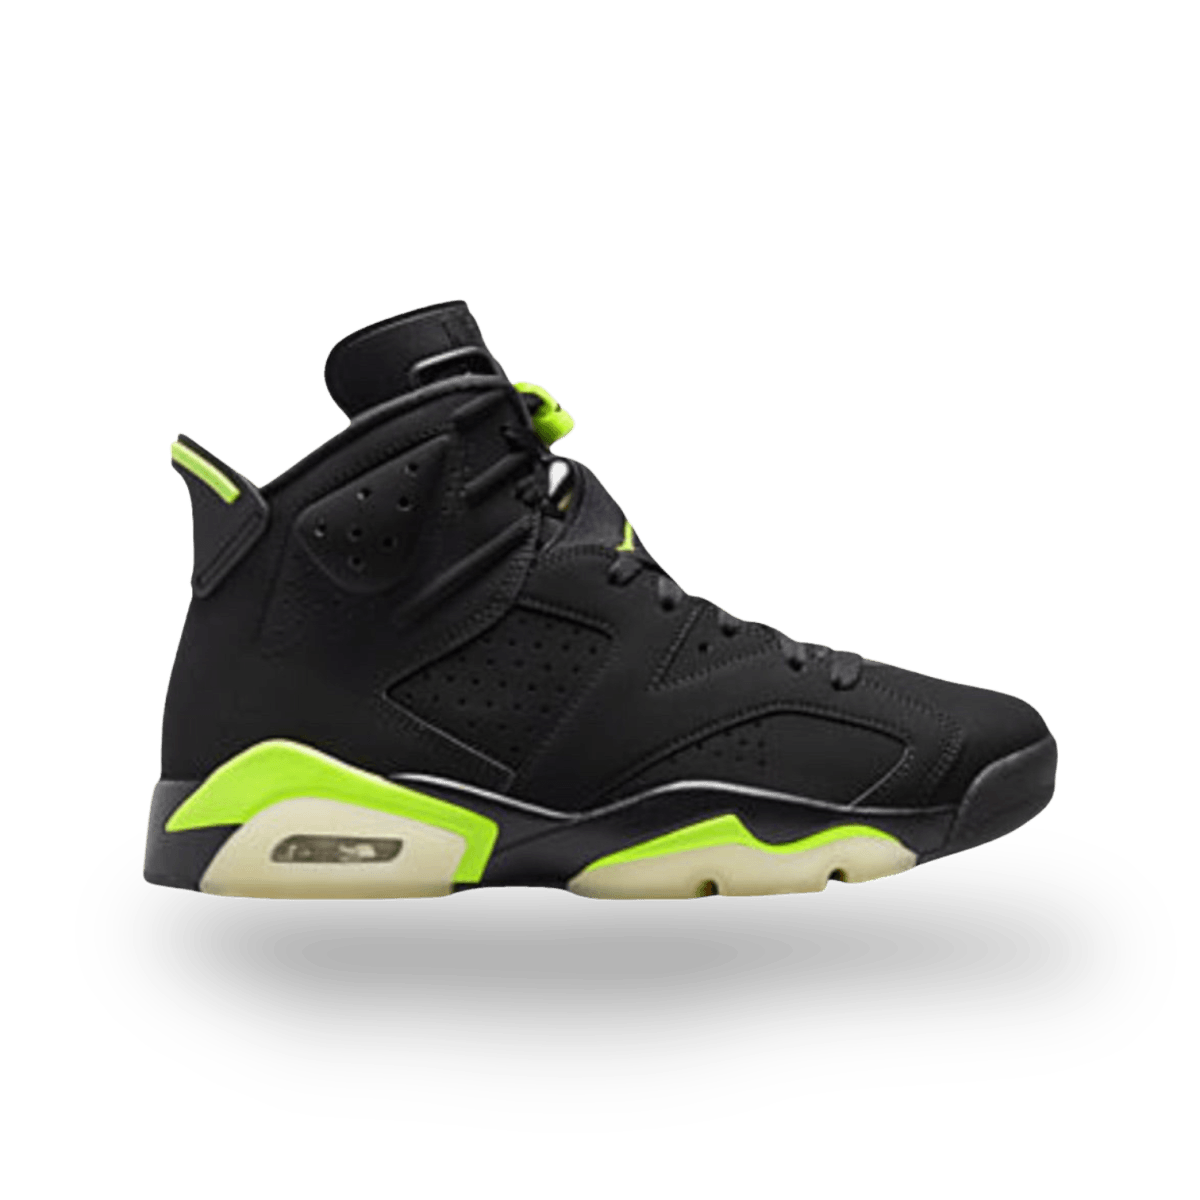 Air Jordan 6 Retro 'Electric Green' - High Sneaker - Jordan - Jawns on Fire - sneakers